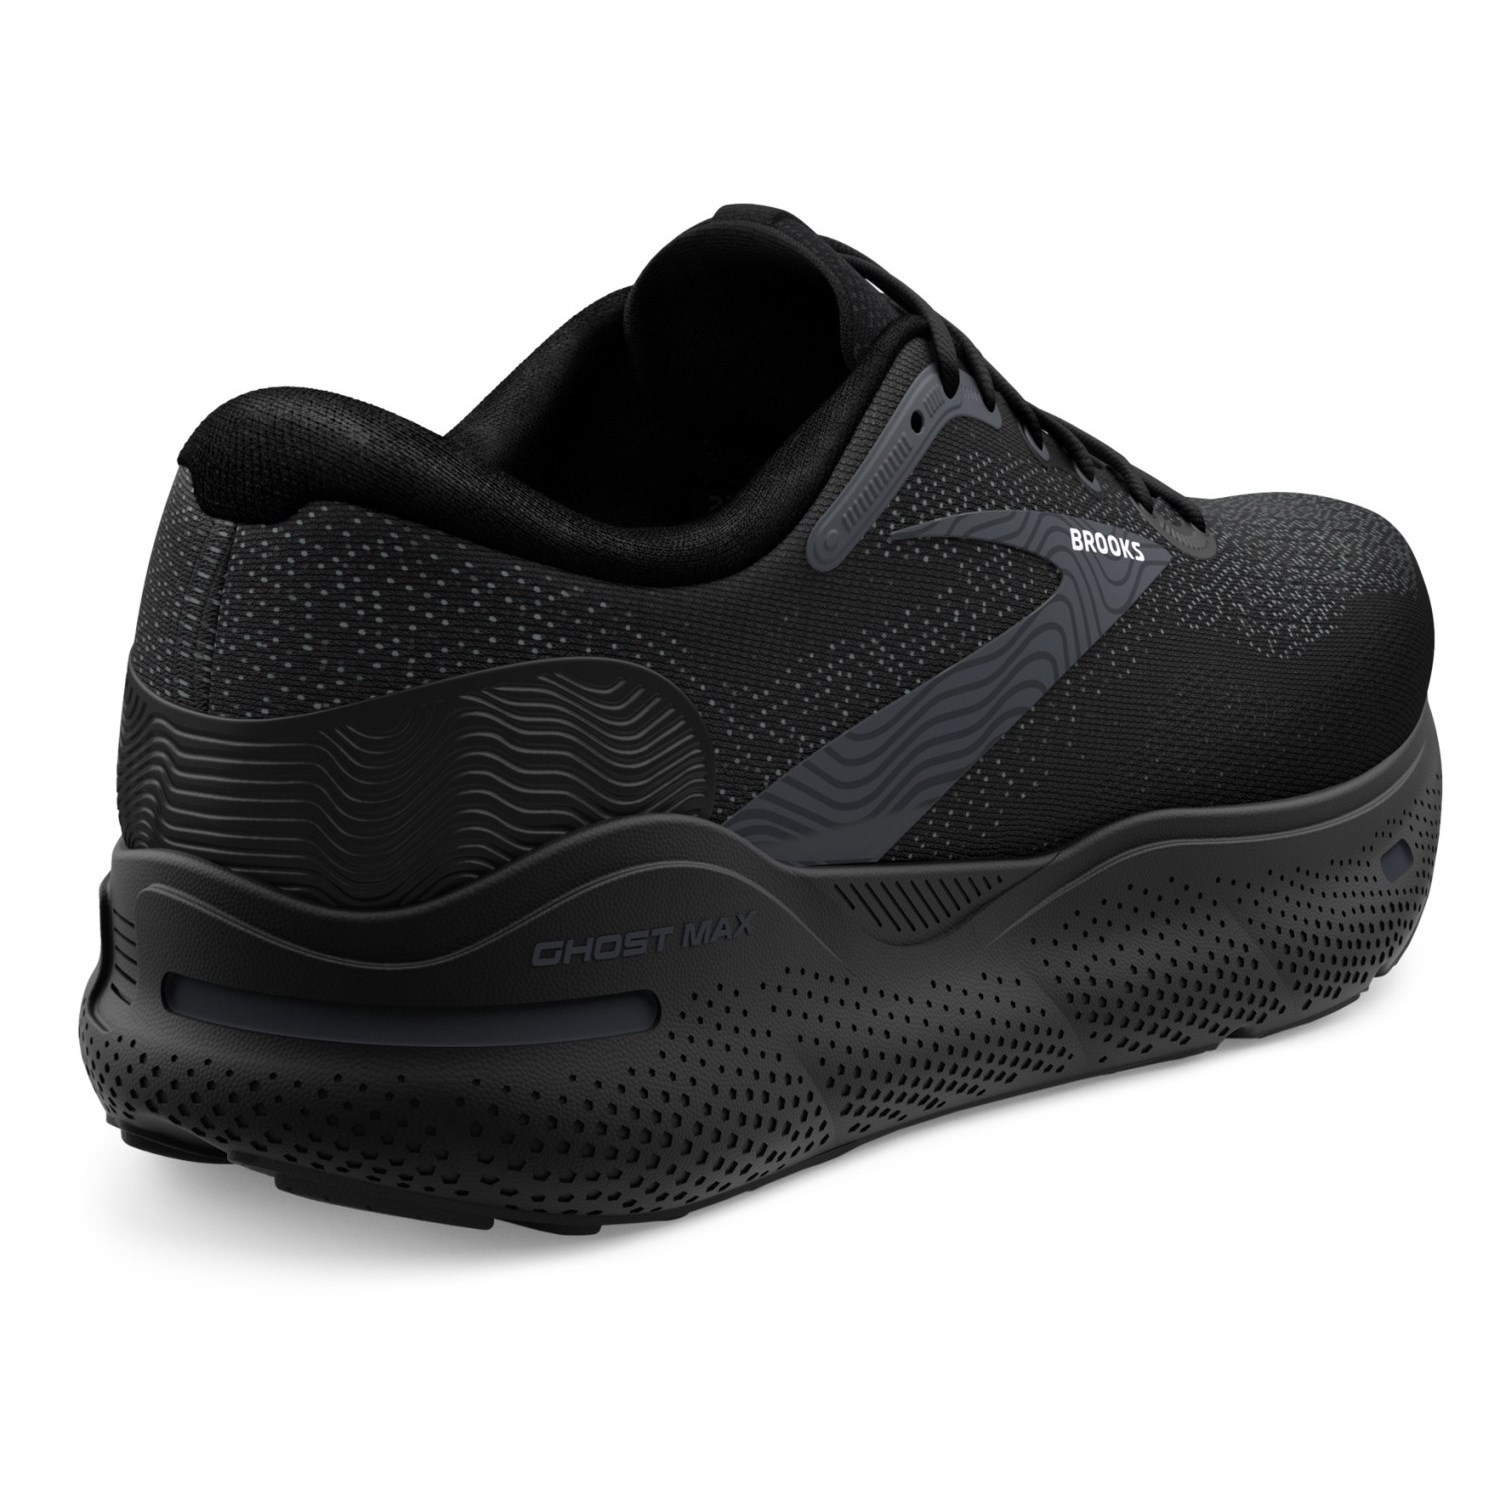 Brooks Ghost Max - Womens Running Shoes - Black/Black/Ebony | Sportitude